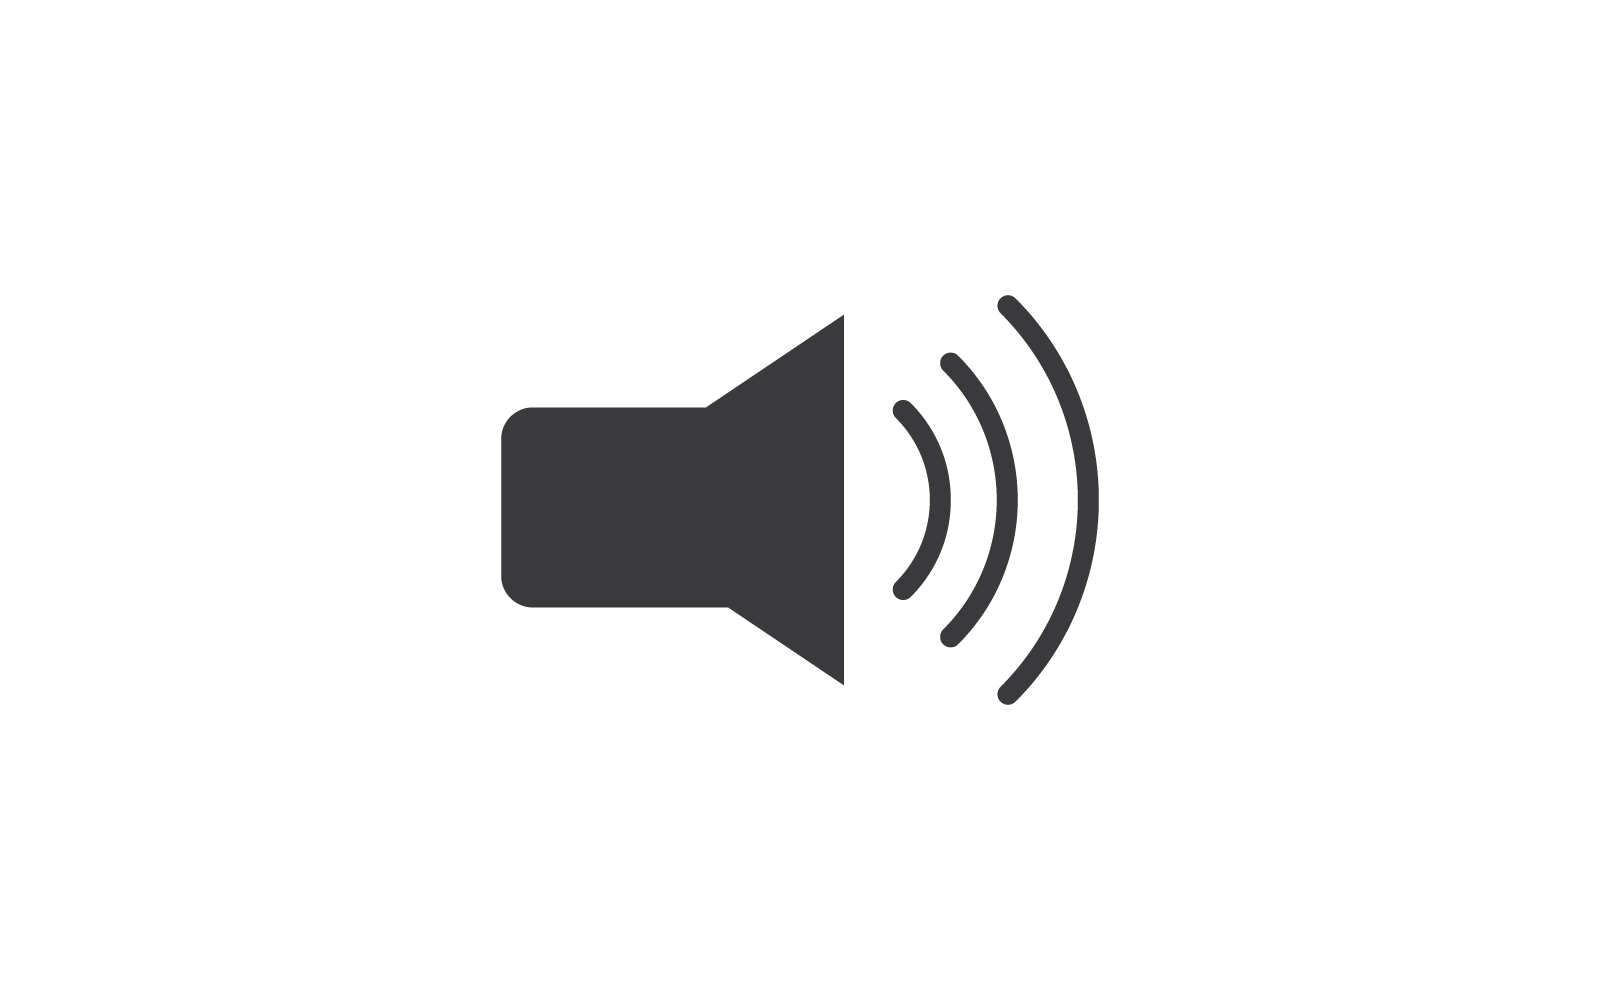 Communication button icon vector design template